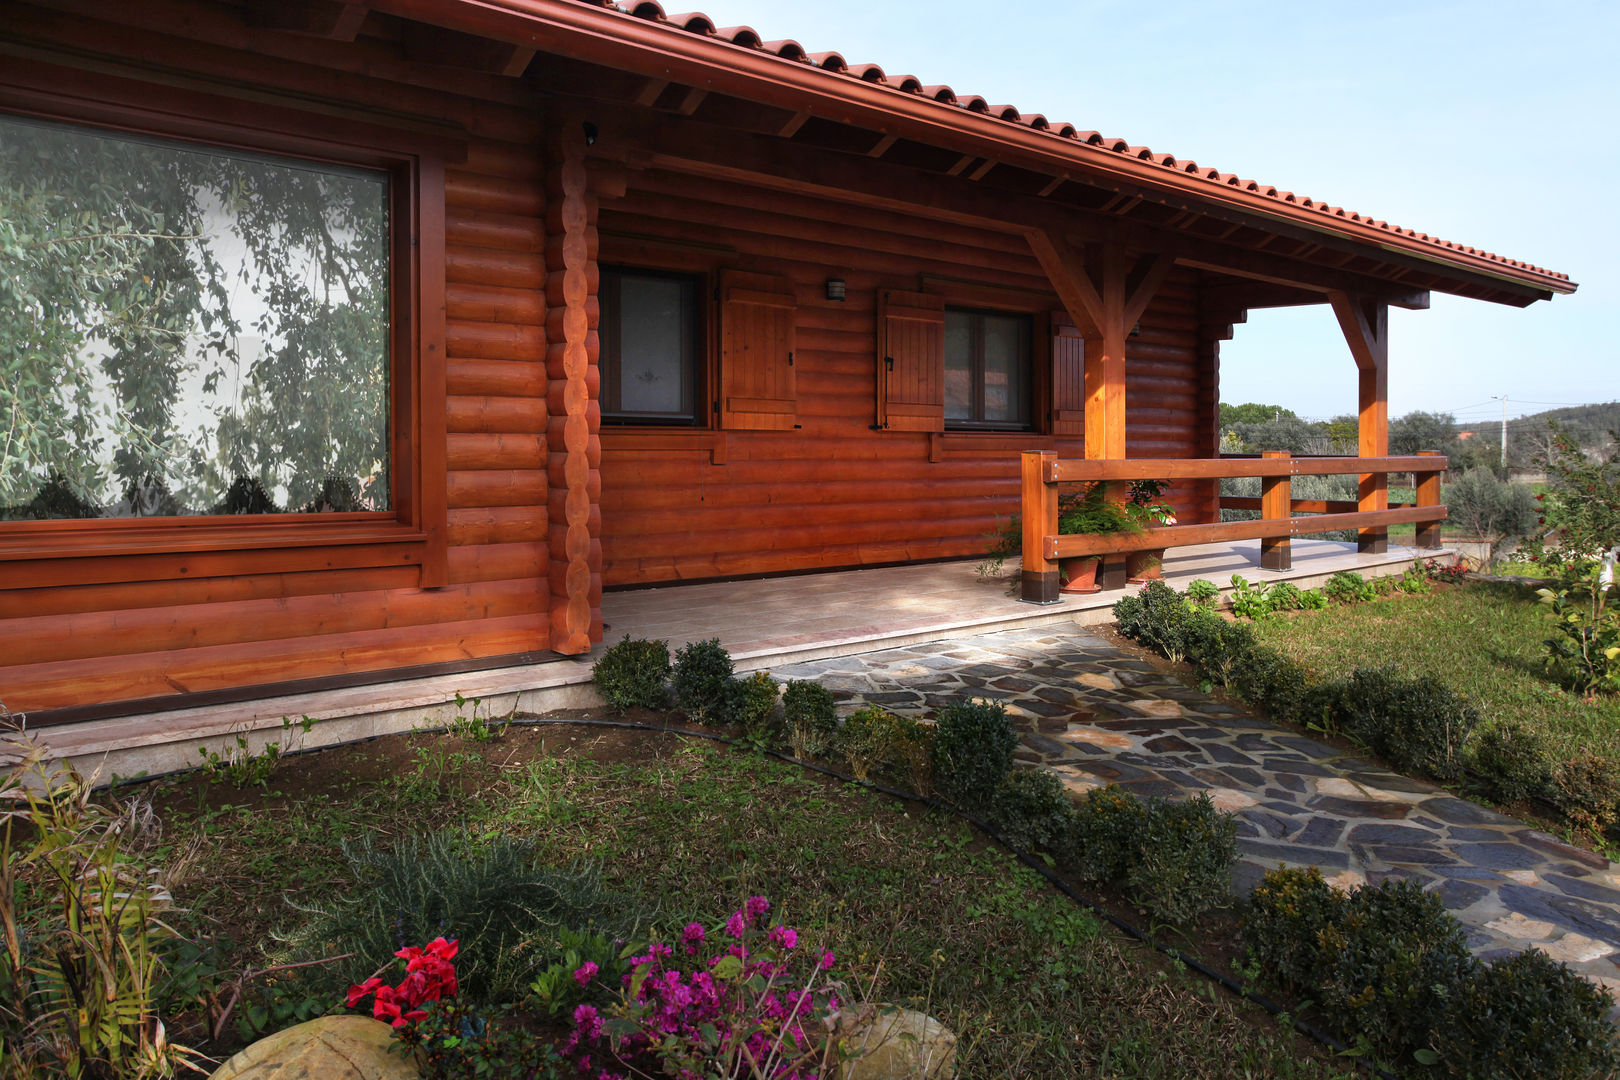 RUSTICASA | 100 projetos | Portugal + Espanha, RUSTICASA RUSTICASA Деревянные дома Твердая древесина Многоцветный